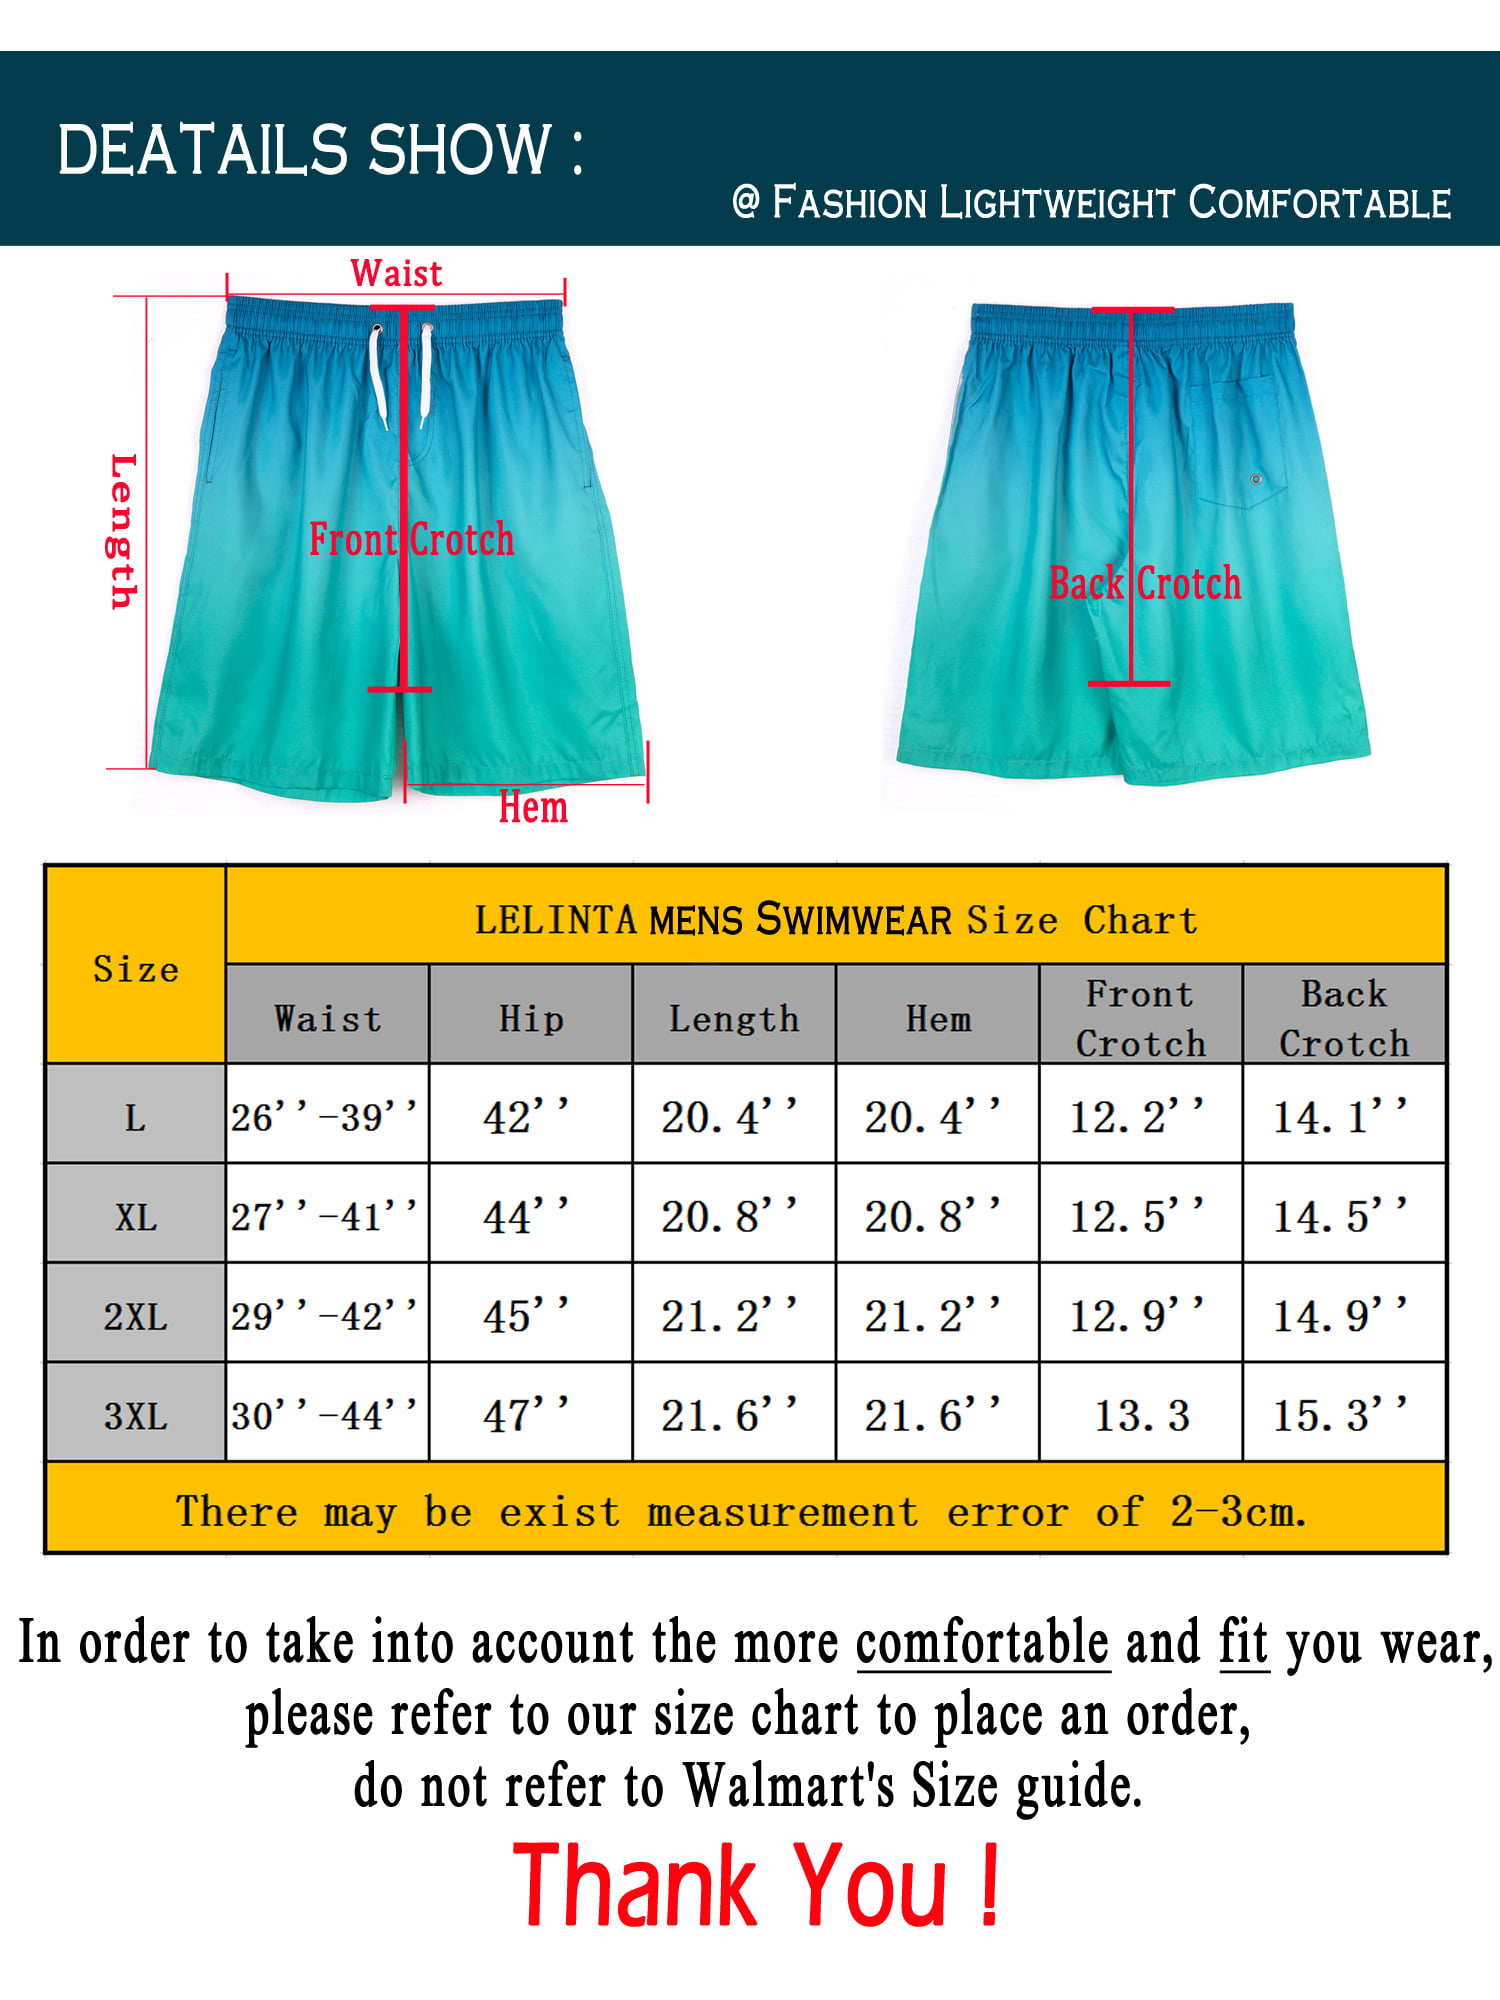 Walmart Swimsuit Size Chart